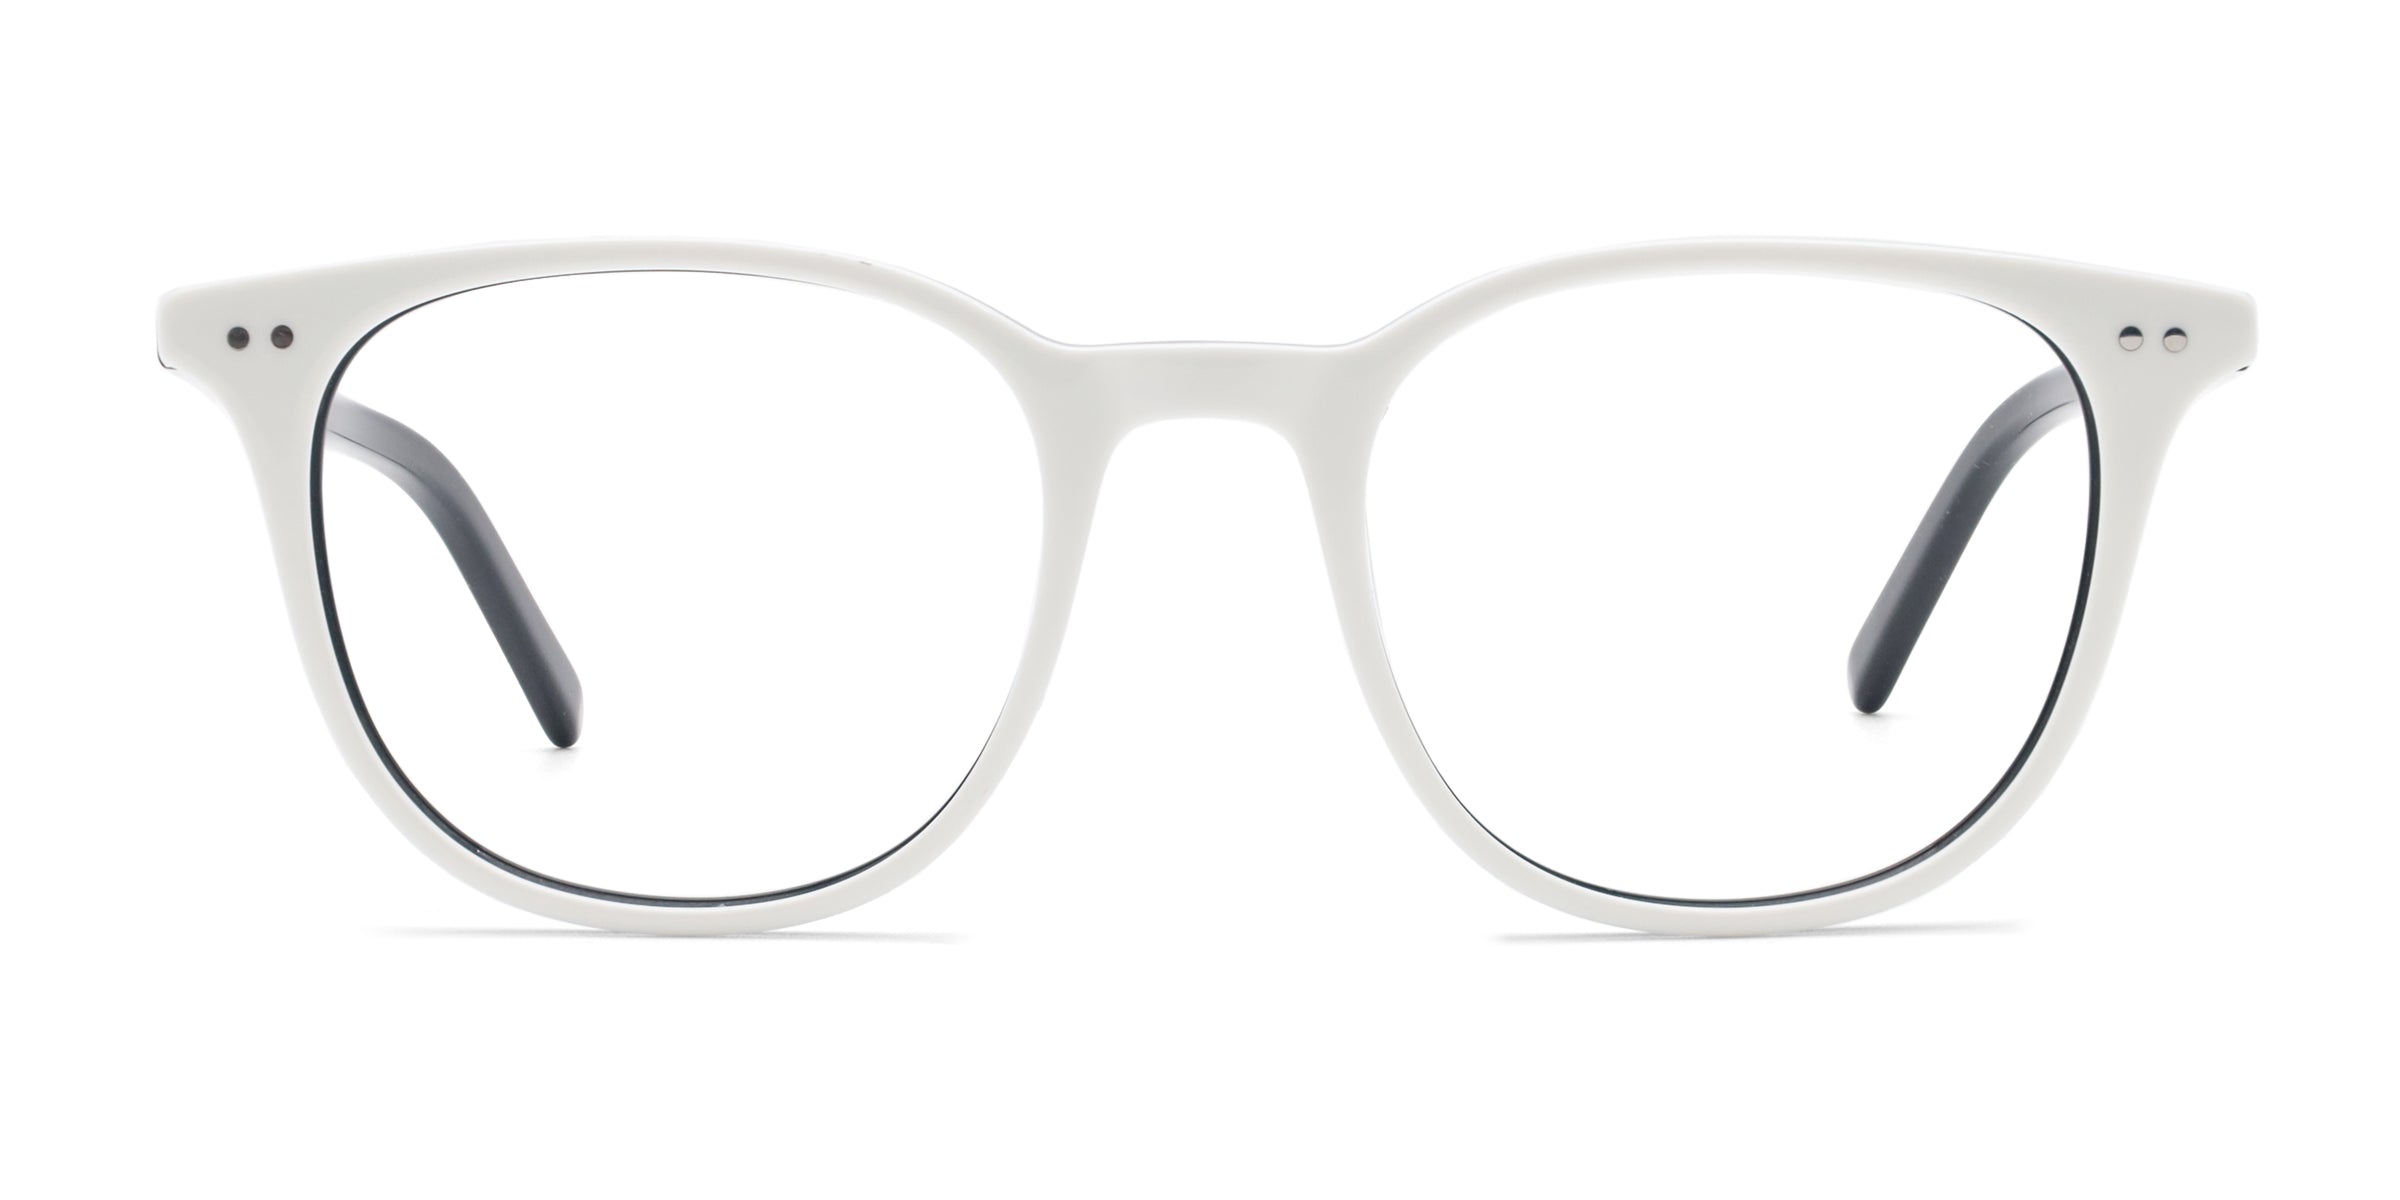 Translucent Gray Thick Geek-Chic Acetate Geometric Blue Light Glasses